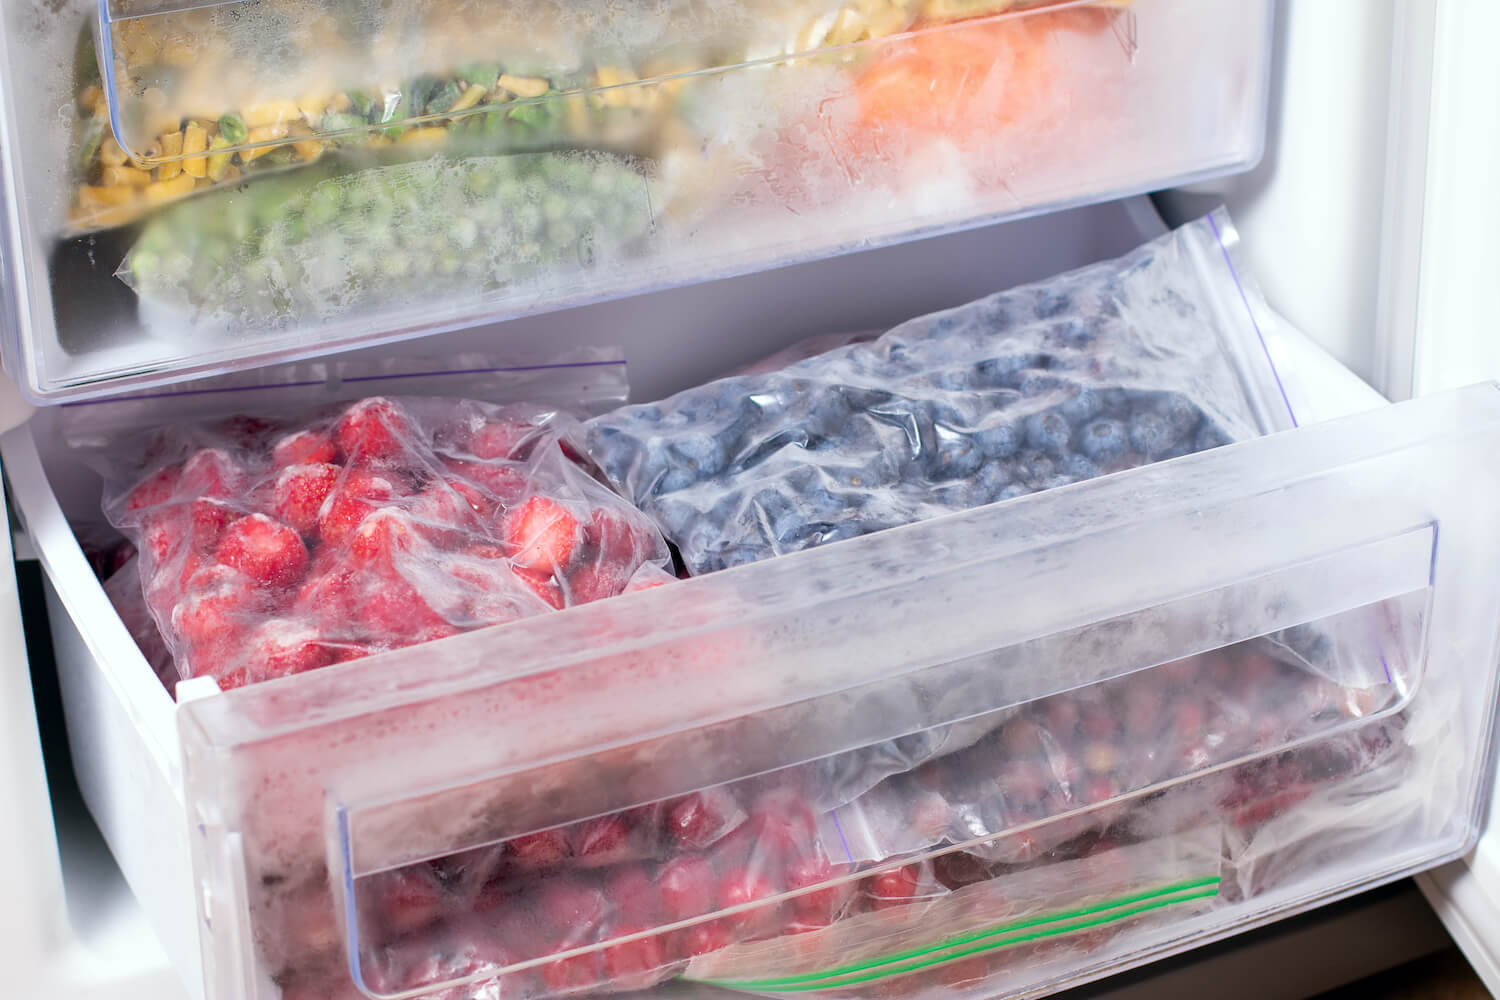 Bags of berries in freezer